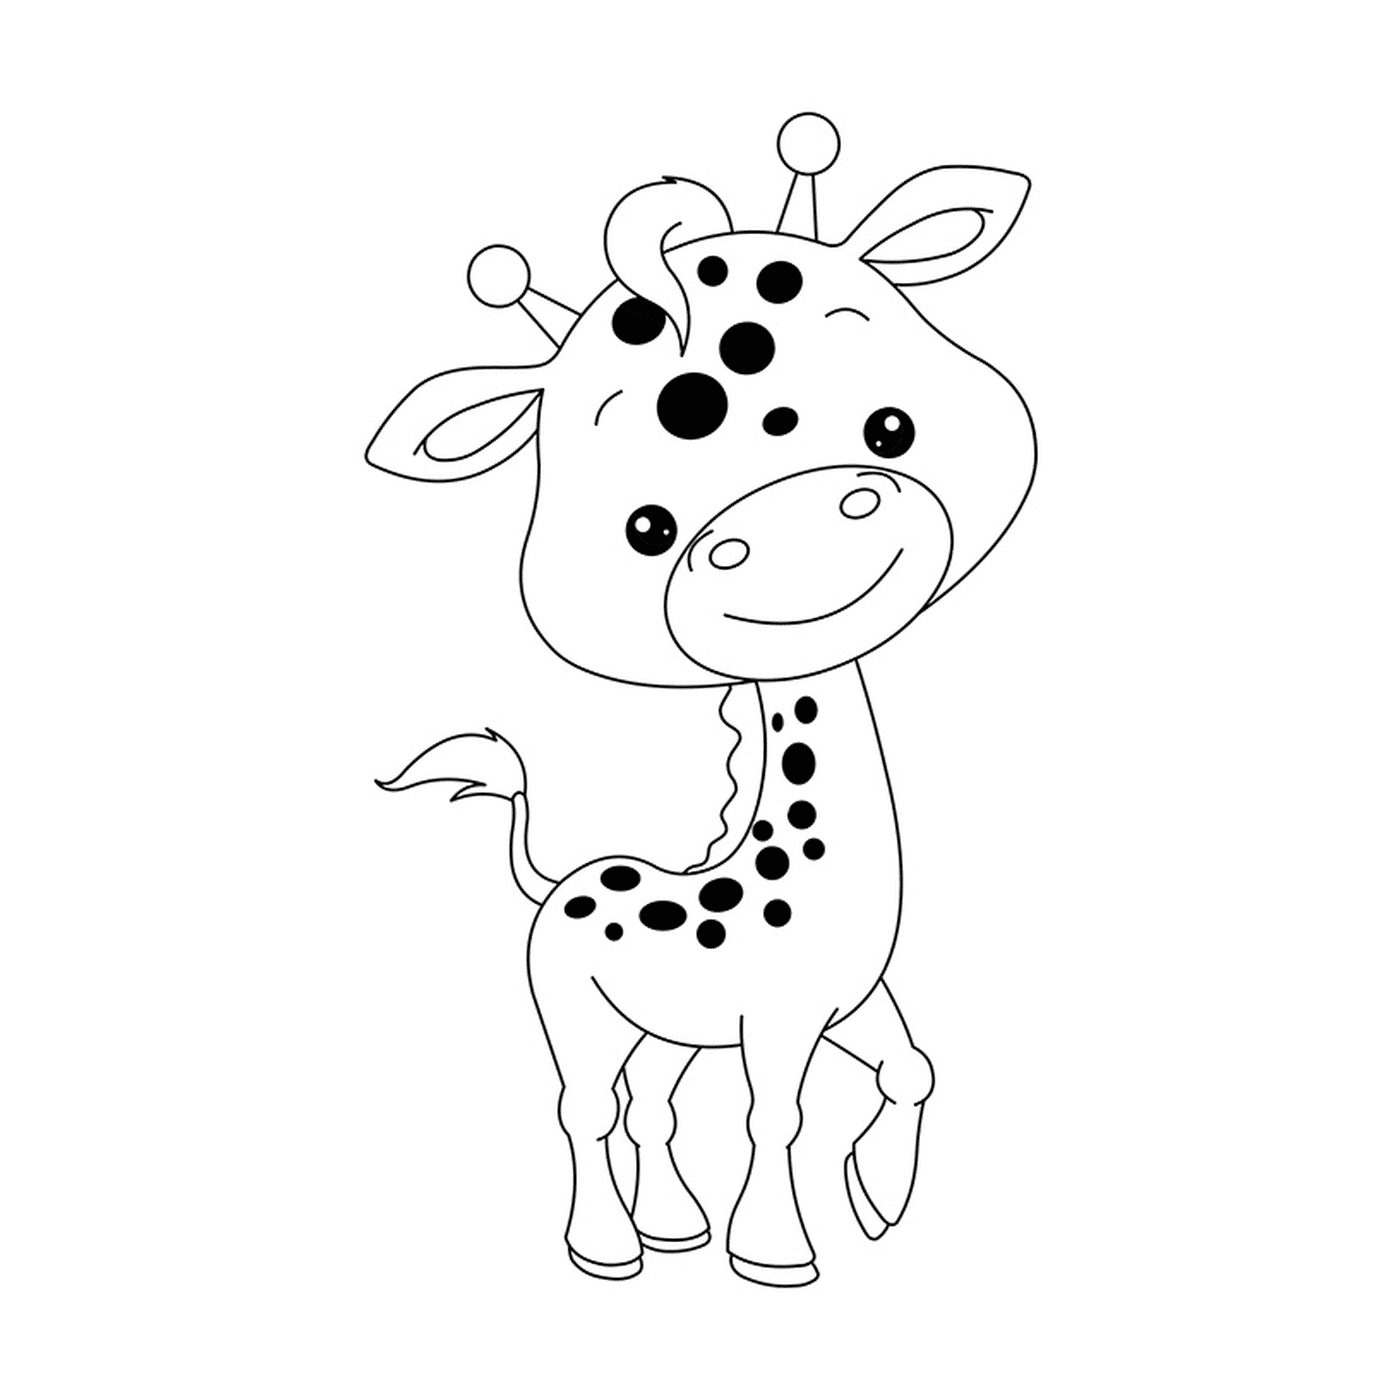  A giraffe baby 